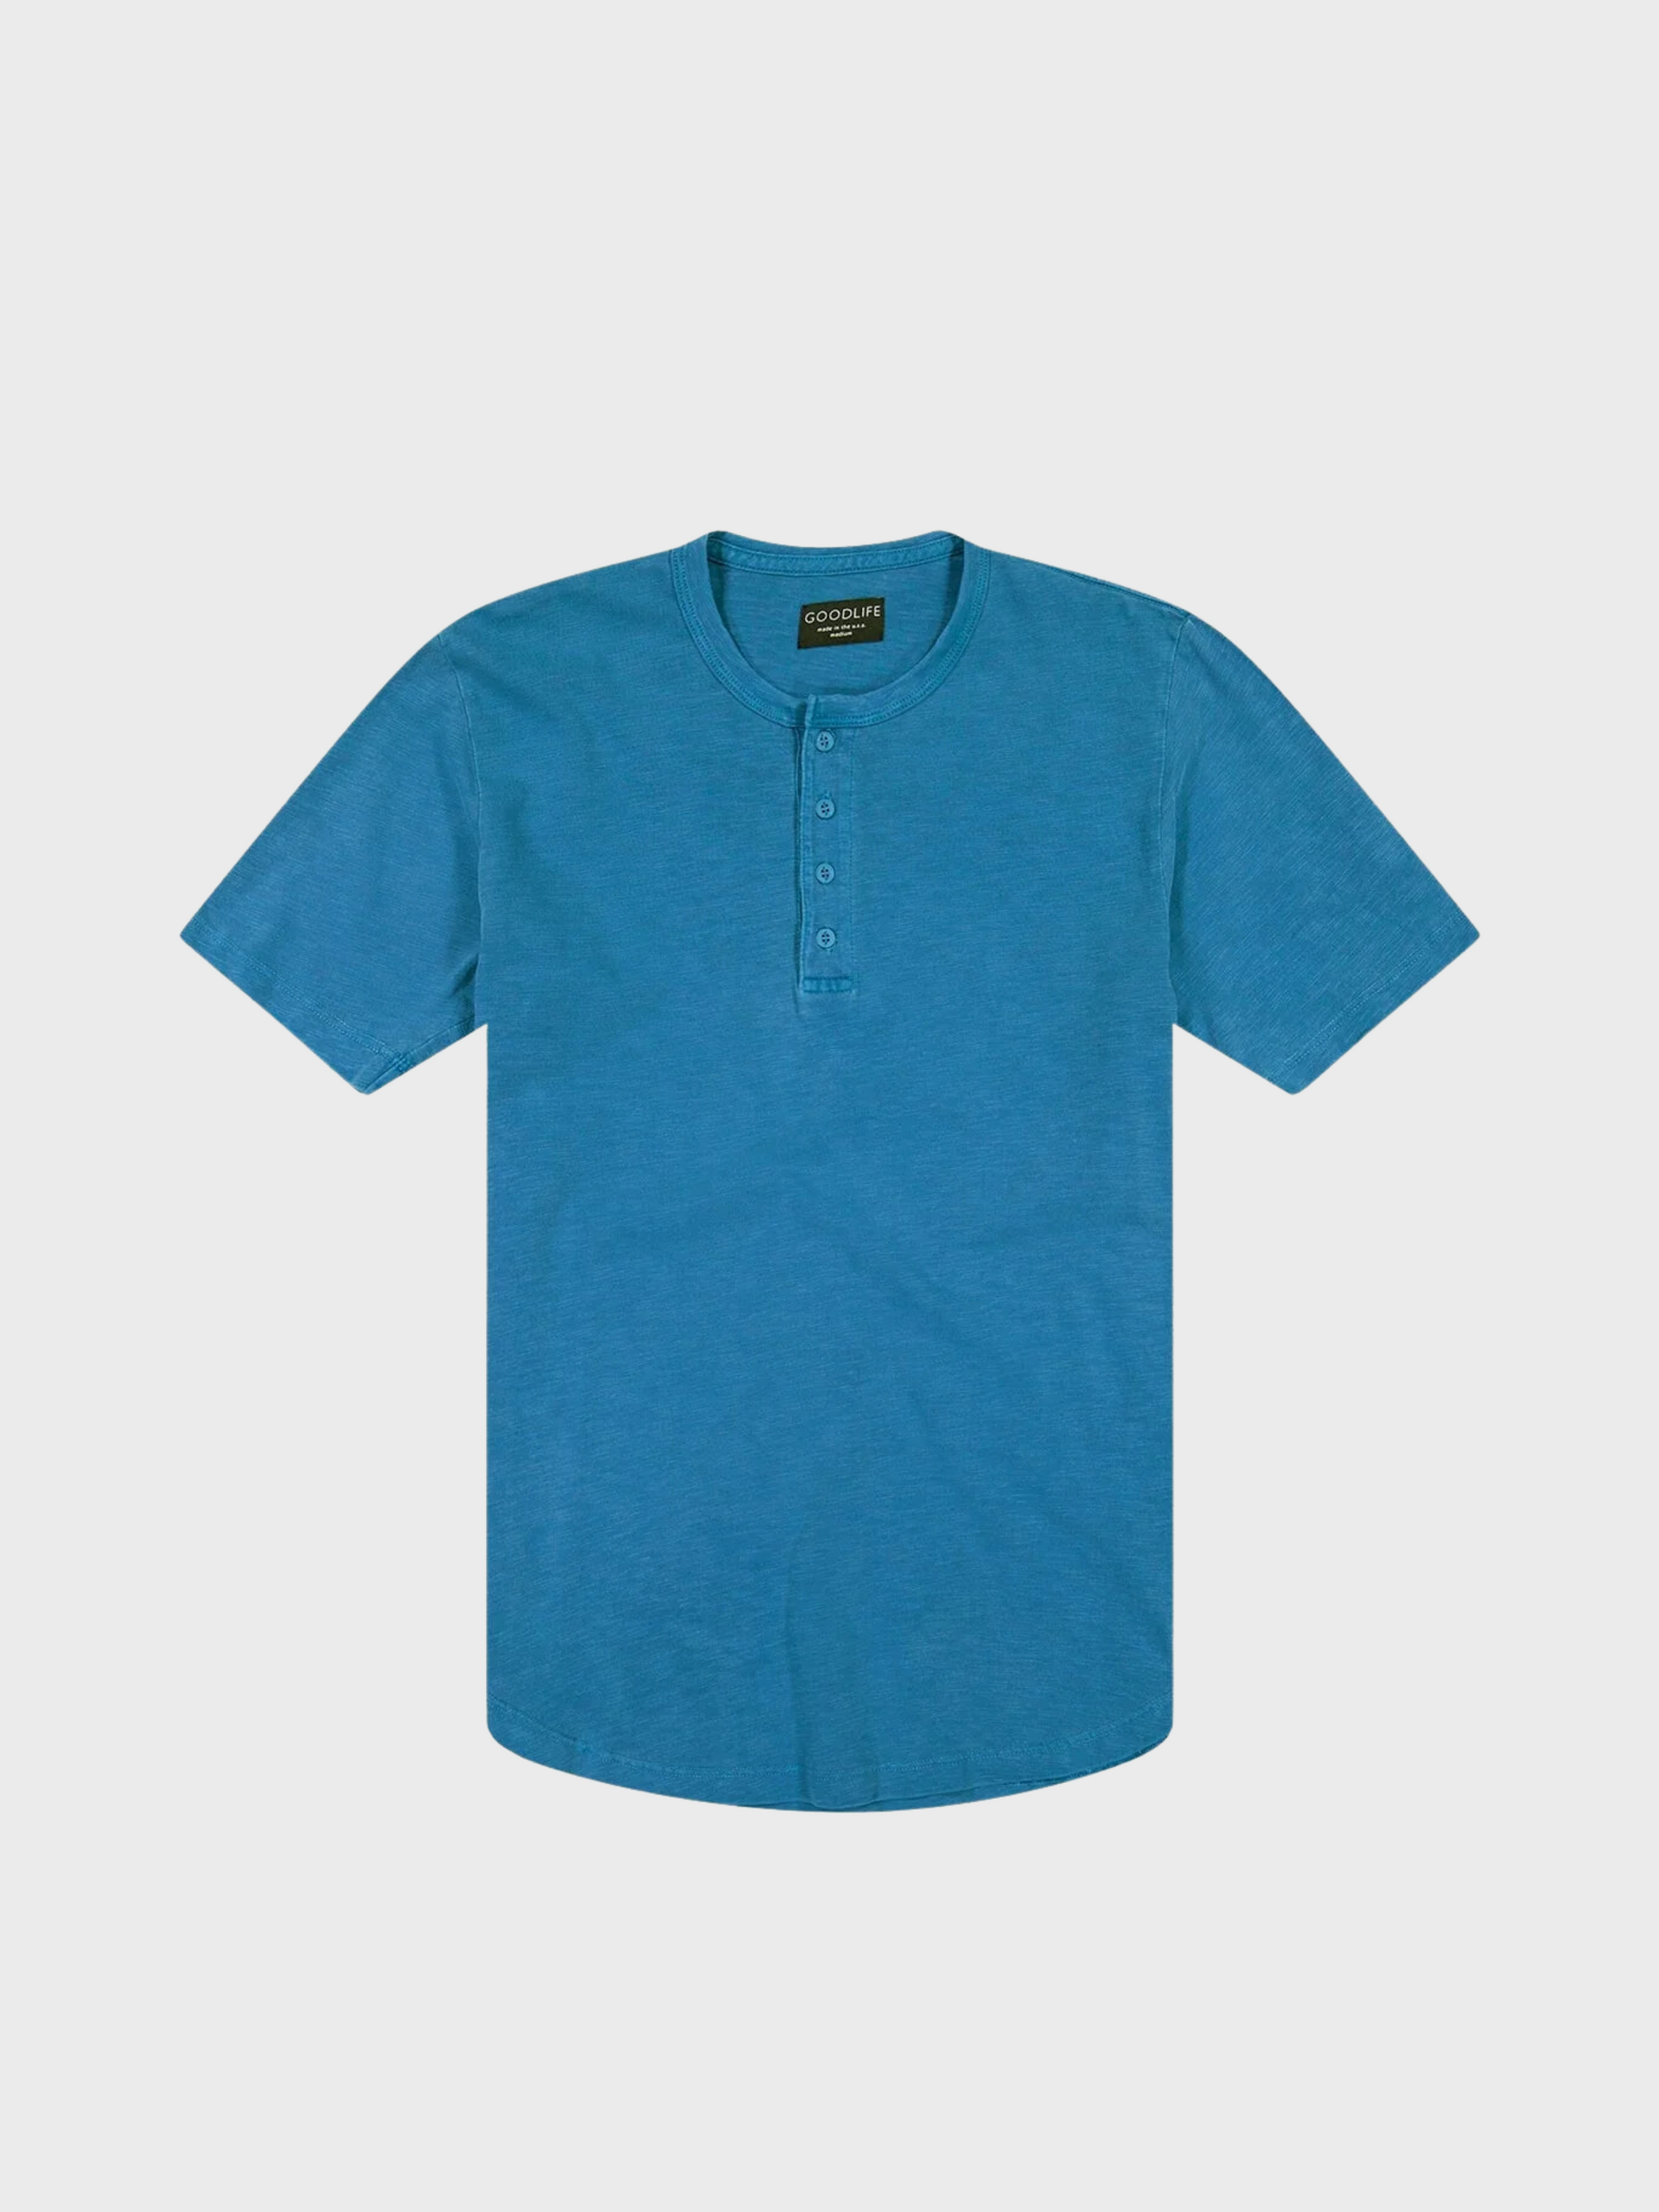 Goodlife Sun Faded Slub Scallop Henley Tee Mykonos Blue-Men's T-Shirts-Yaletown-Vancouver-Surrey-Canada